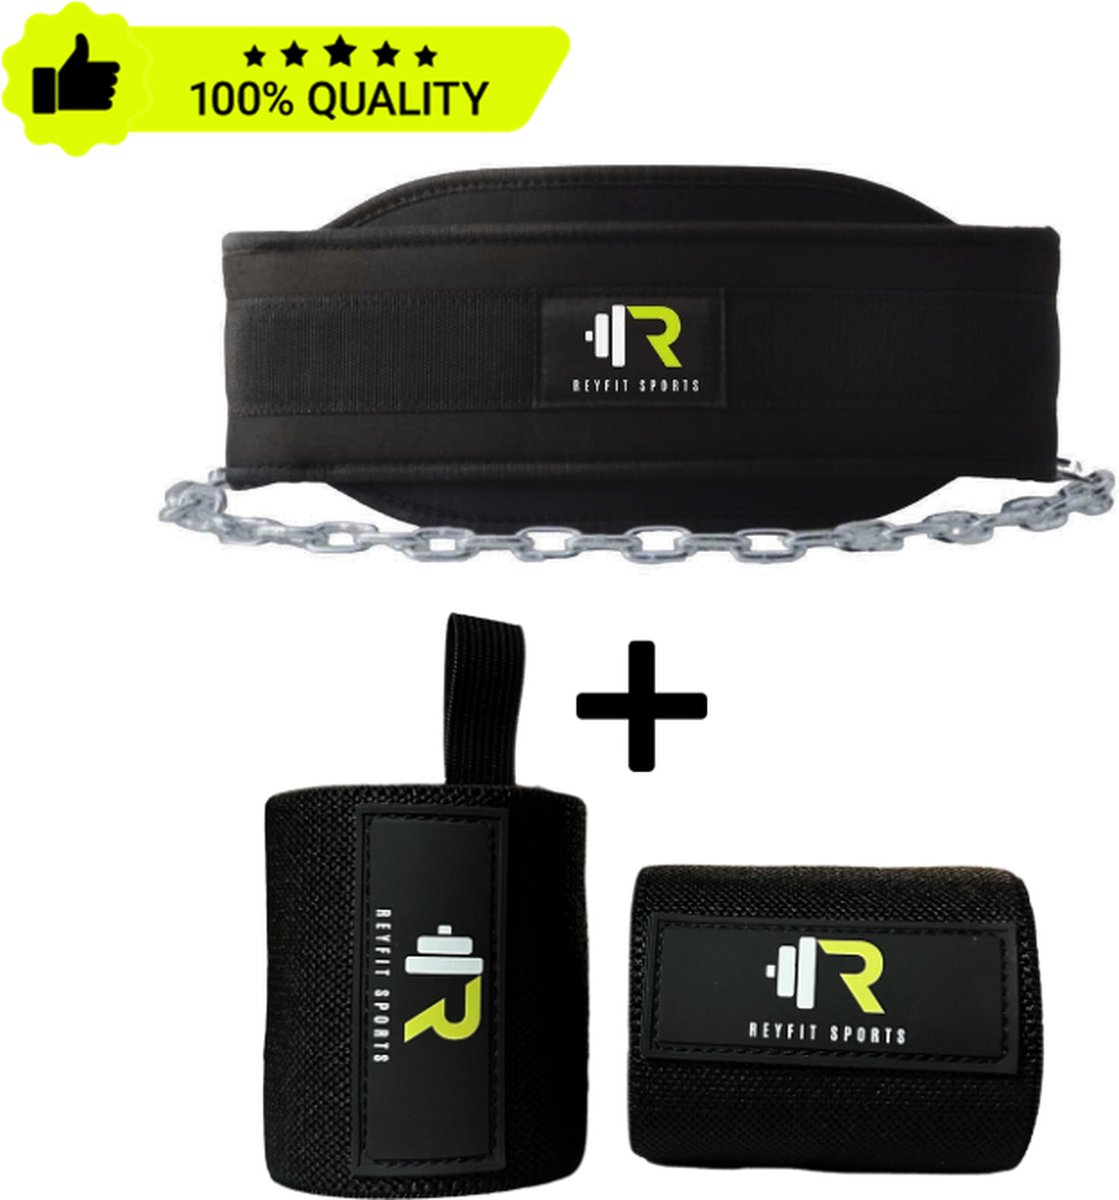 ReyFit Sports - Gordel dip + 2x Polsondersteuning Bundel - Dip Belt + Wrist Wraps - Fitness Accessoires - Hoog Kwaliteit - Zwart